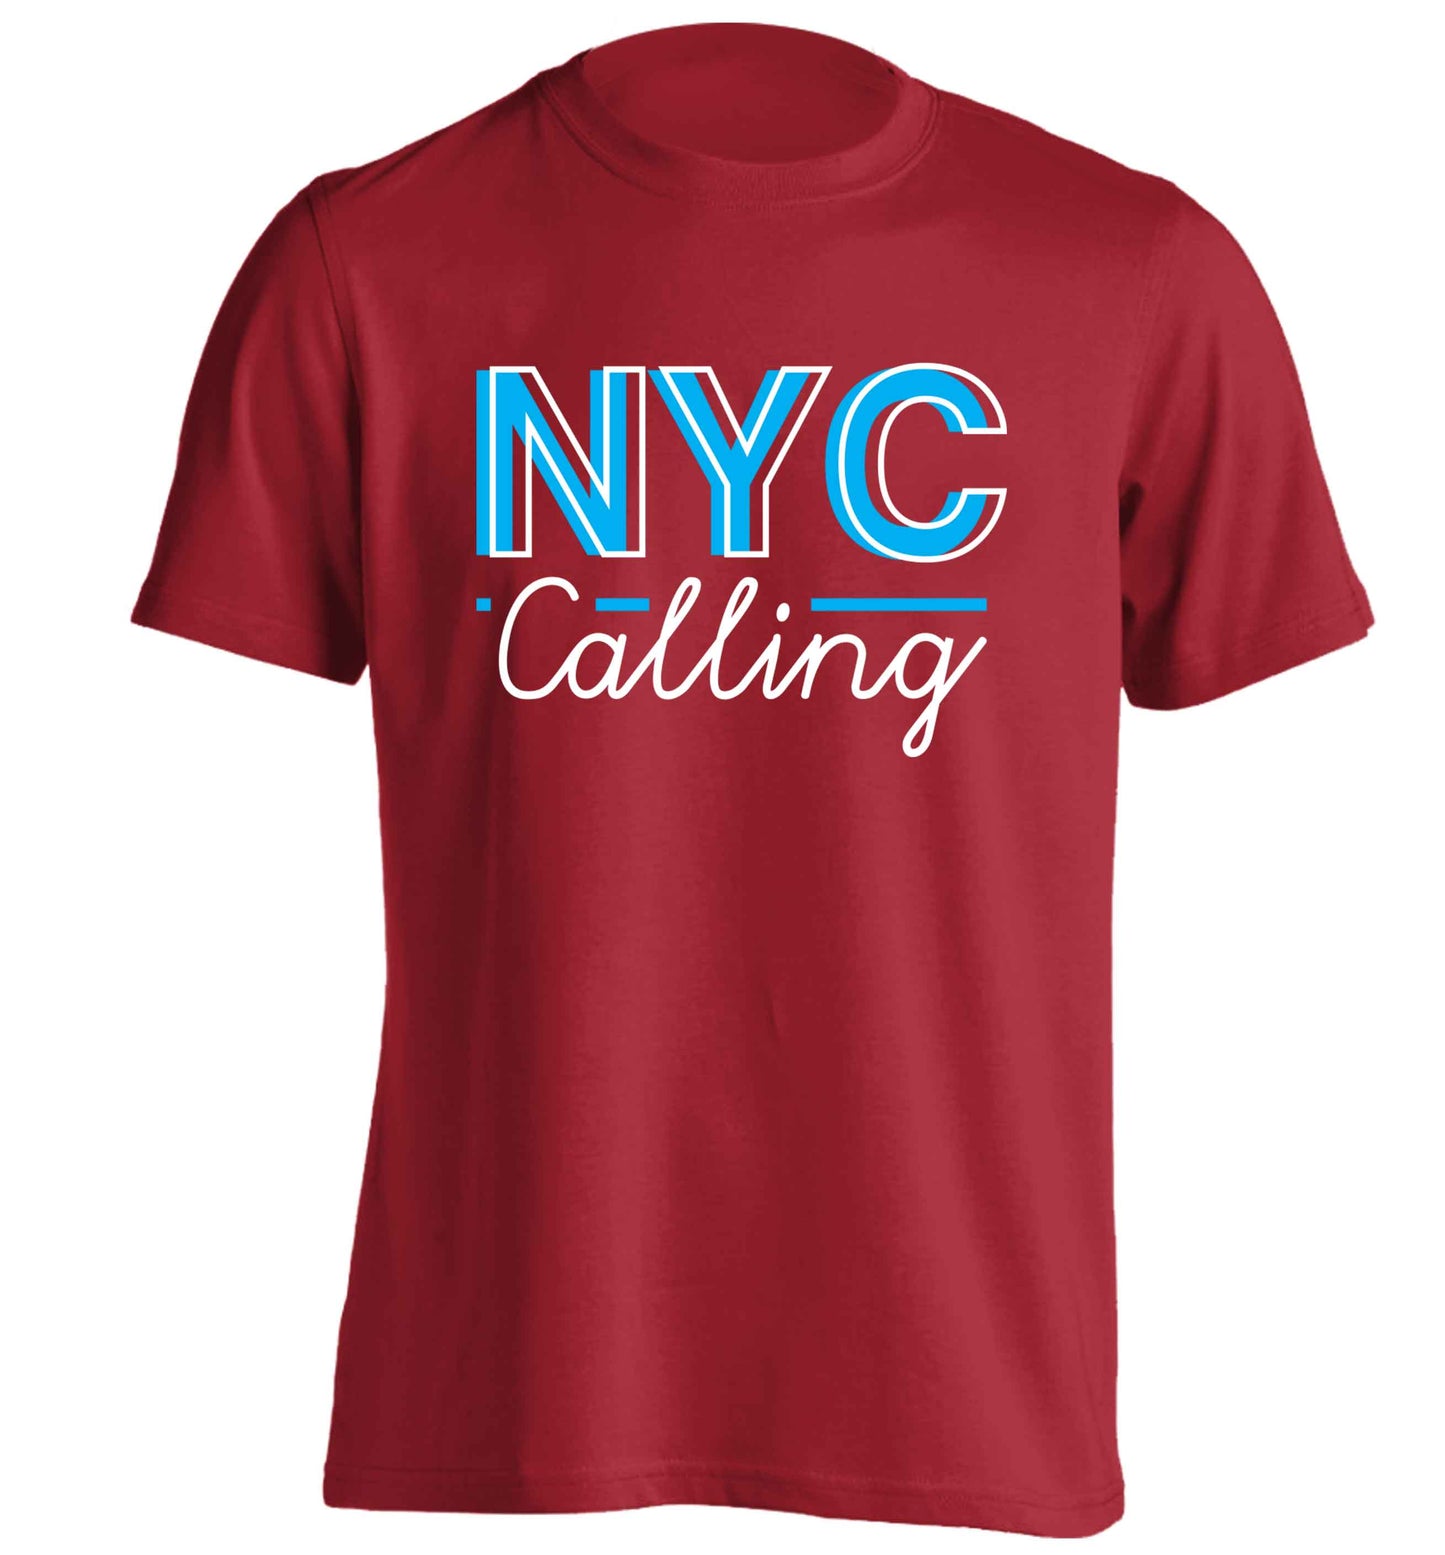 NYC calling adults unisex red Tshirt 2XL